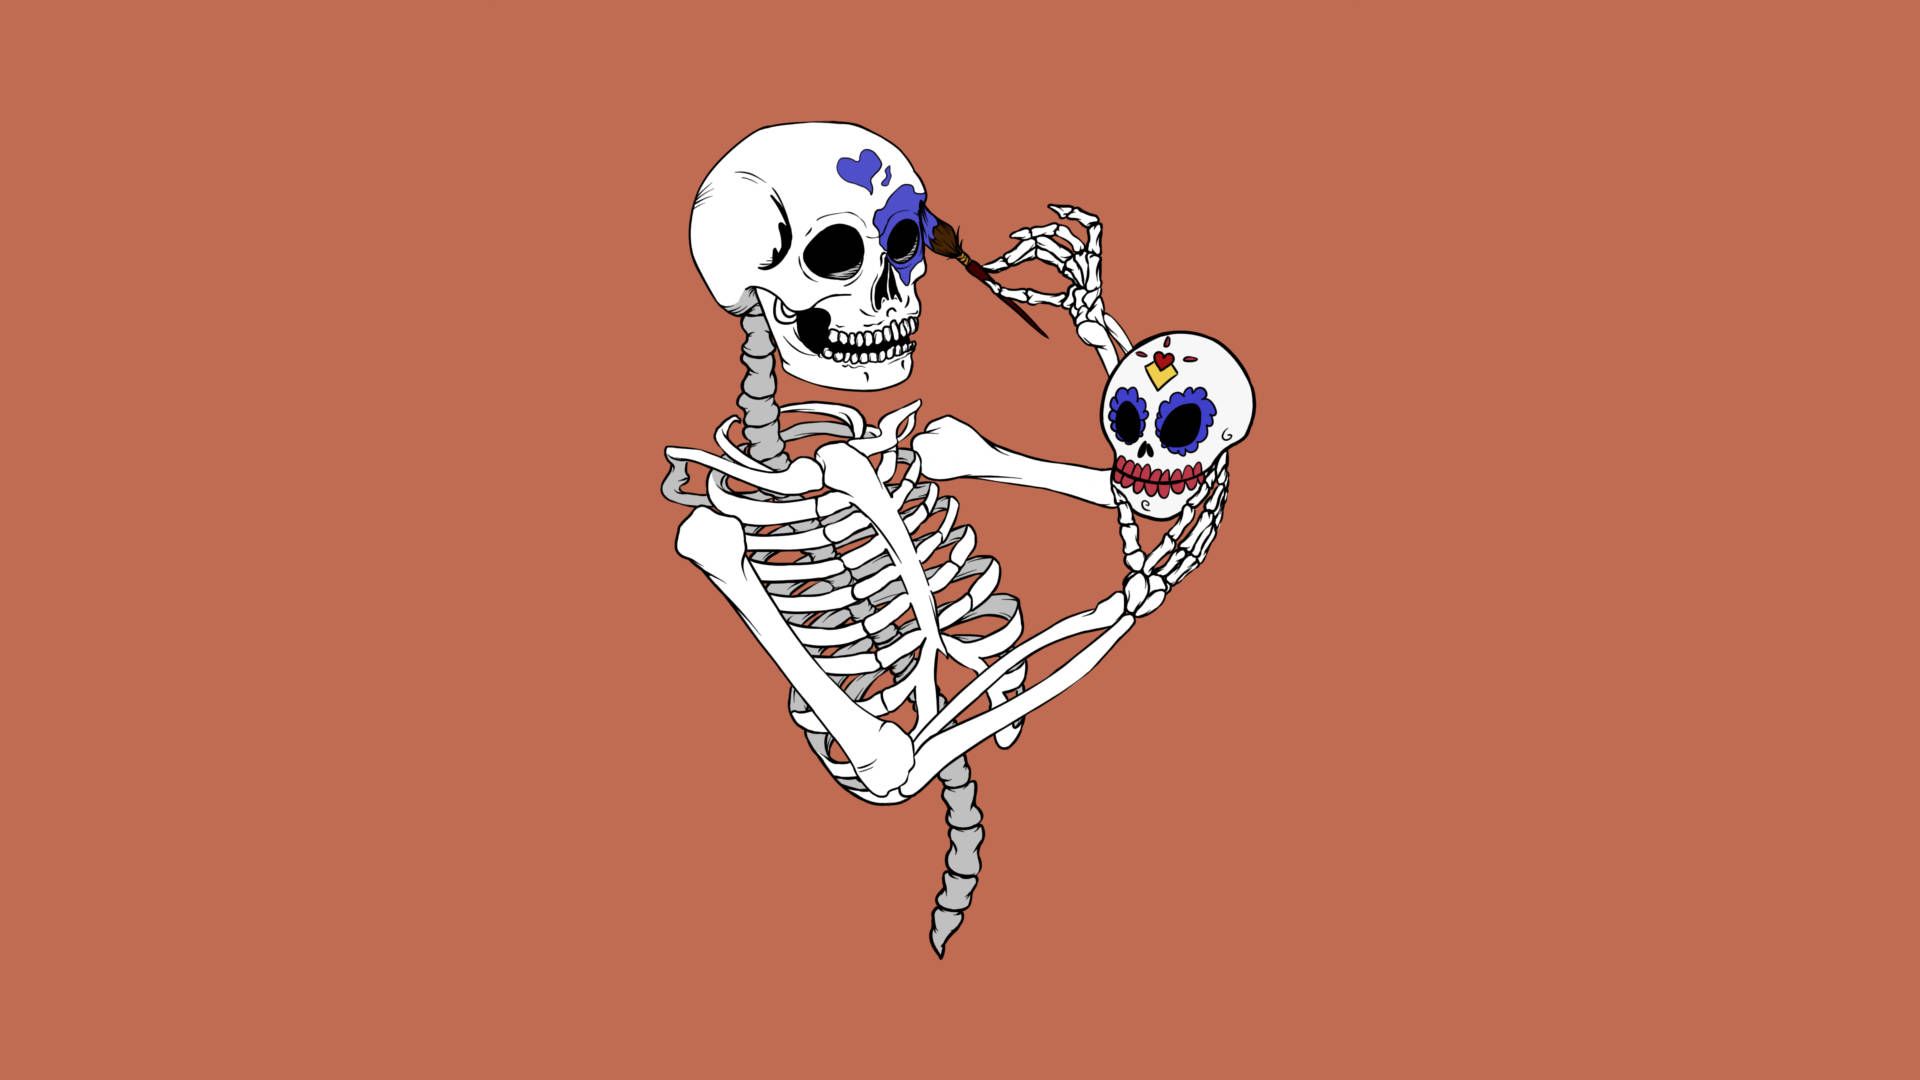 A skeleton holding a smaller skeleton in its hand - Skeleton